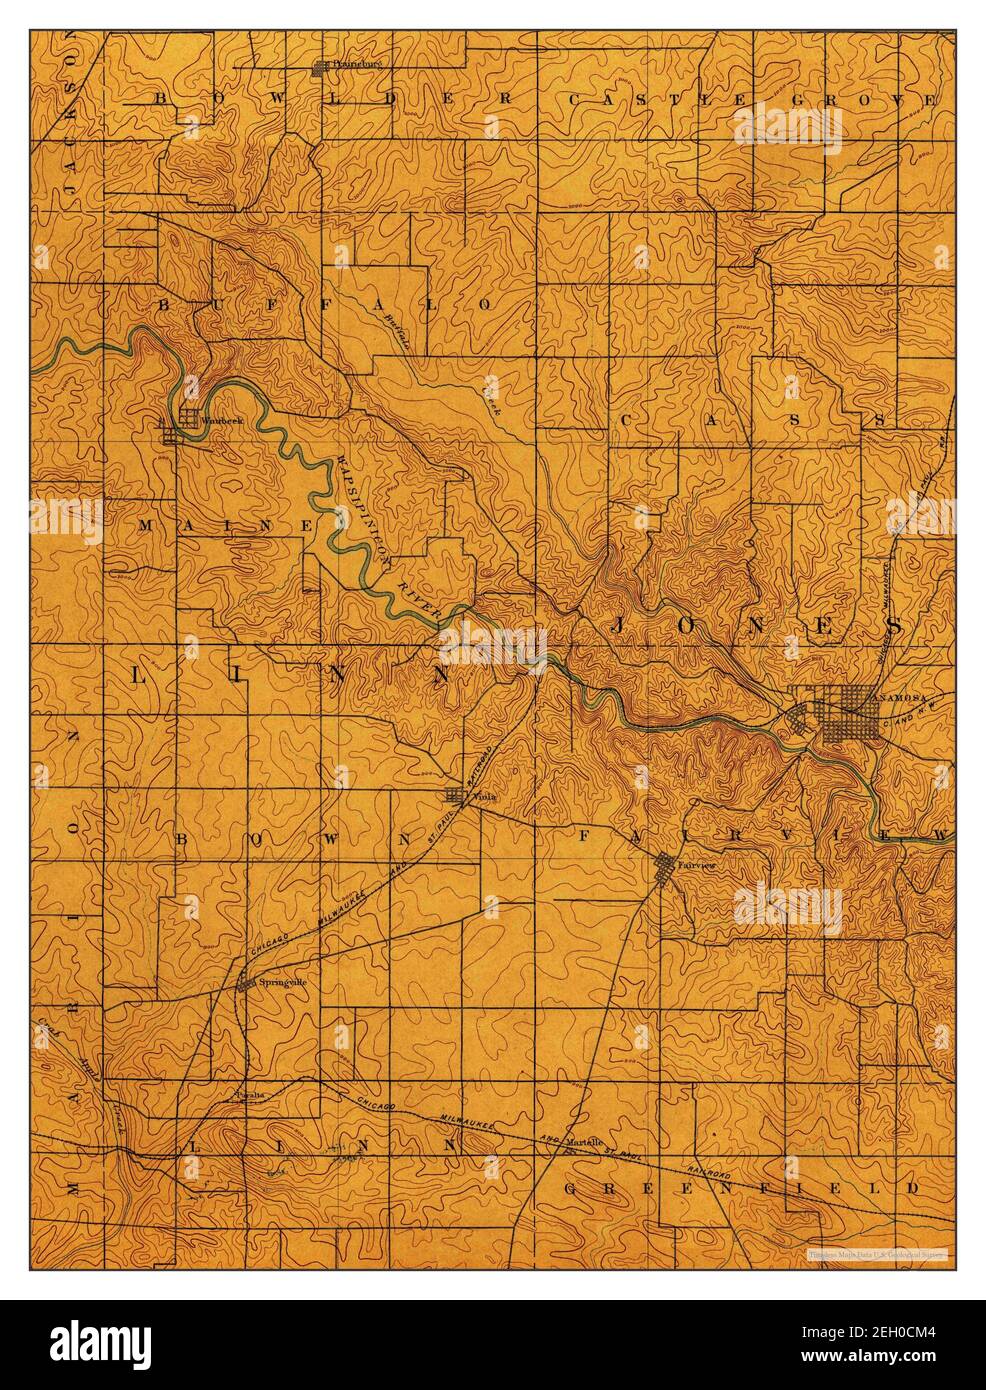 Anamosa, Iowa, map 1890, 1:62500, United States of America by Timeless Maps, data U.S. Geological Survey Stock Photo